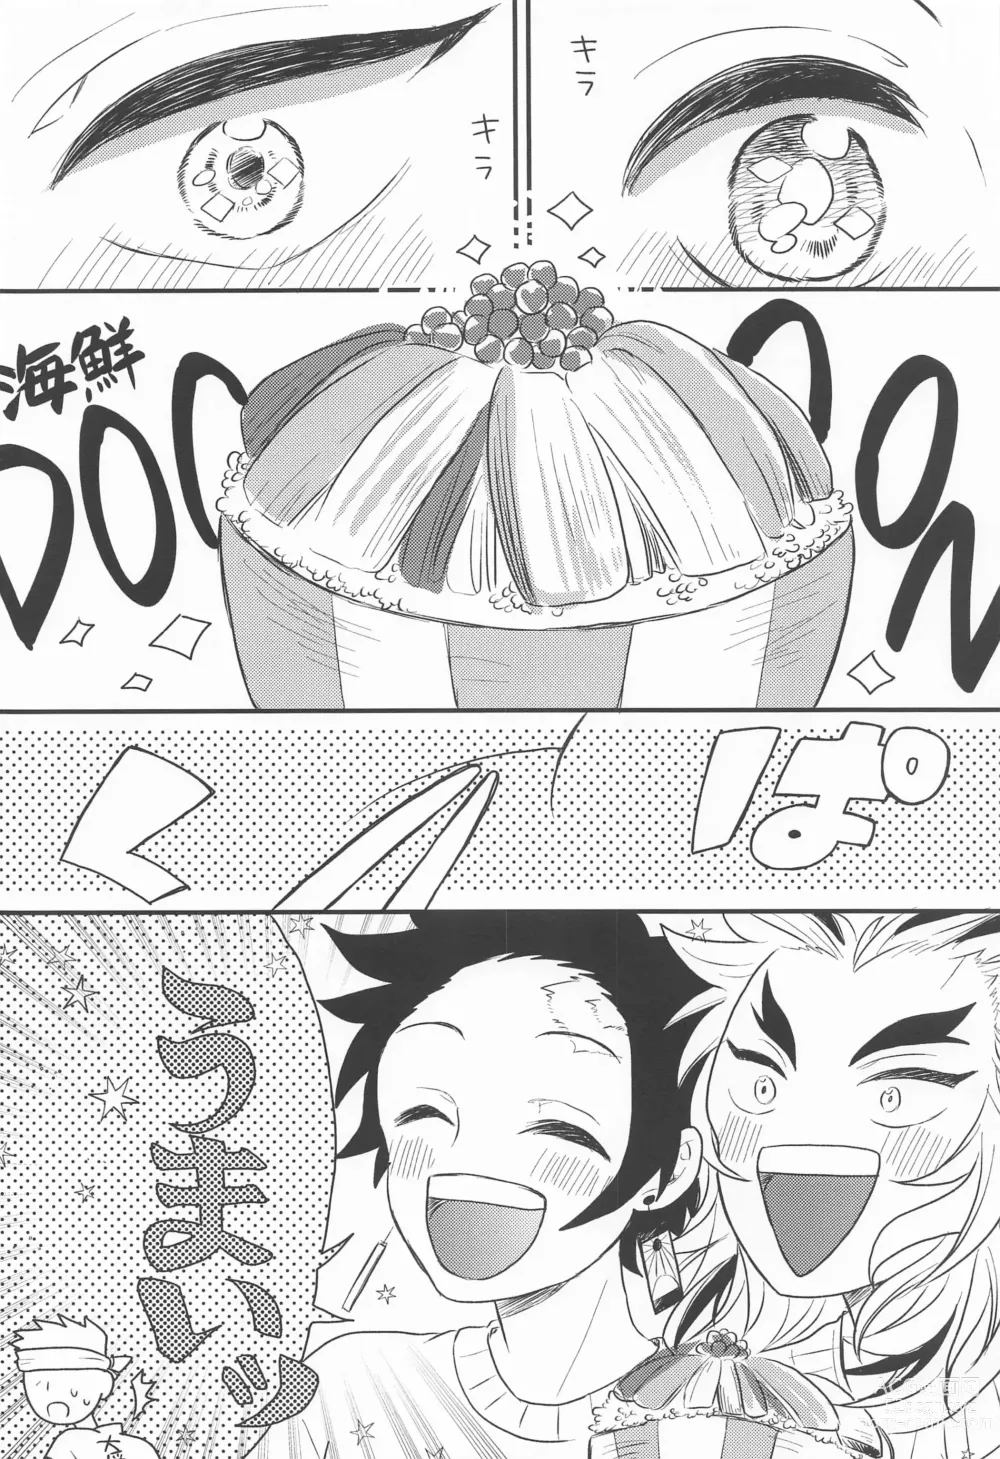 Page 29 of doujinshi Madogiwa no Rinjin To Fuyu no Hi